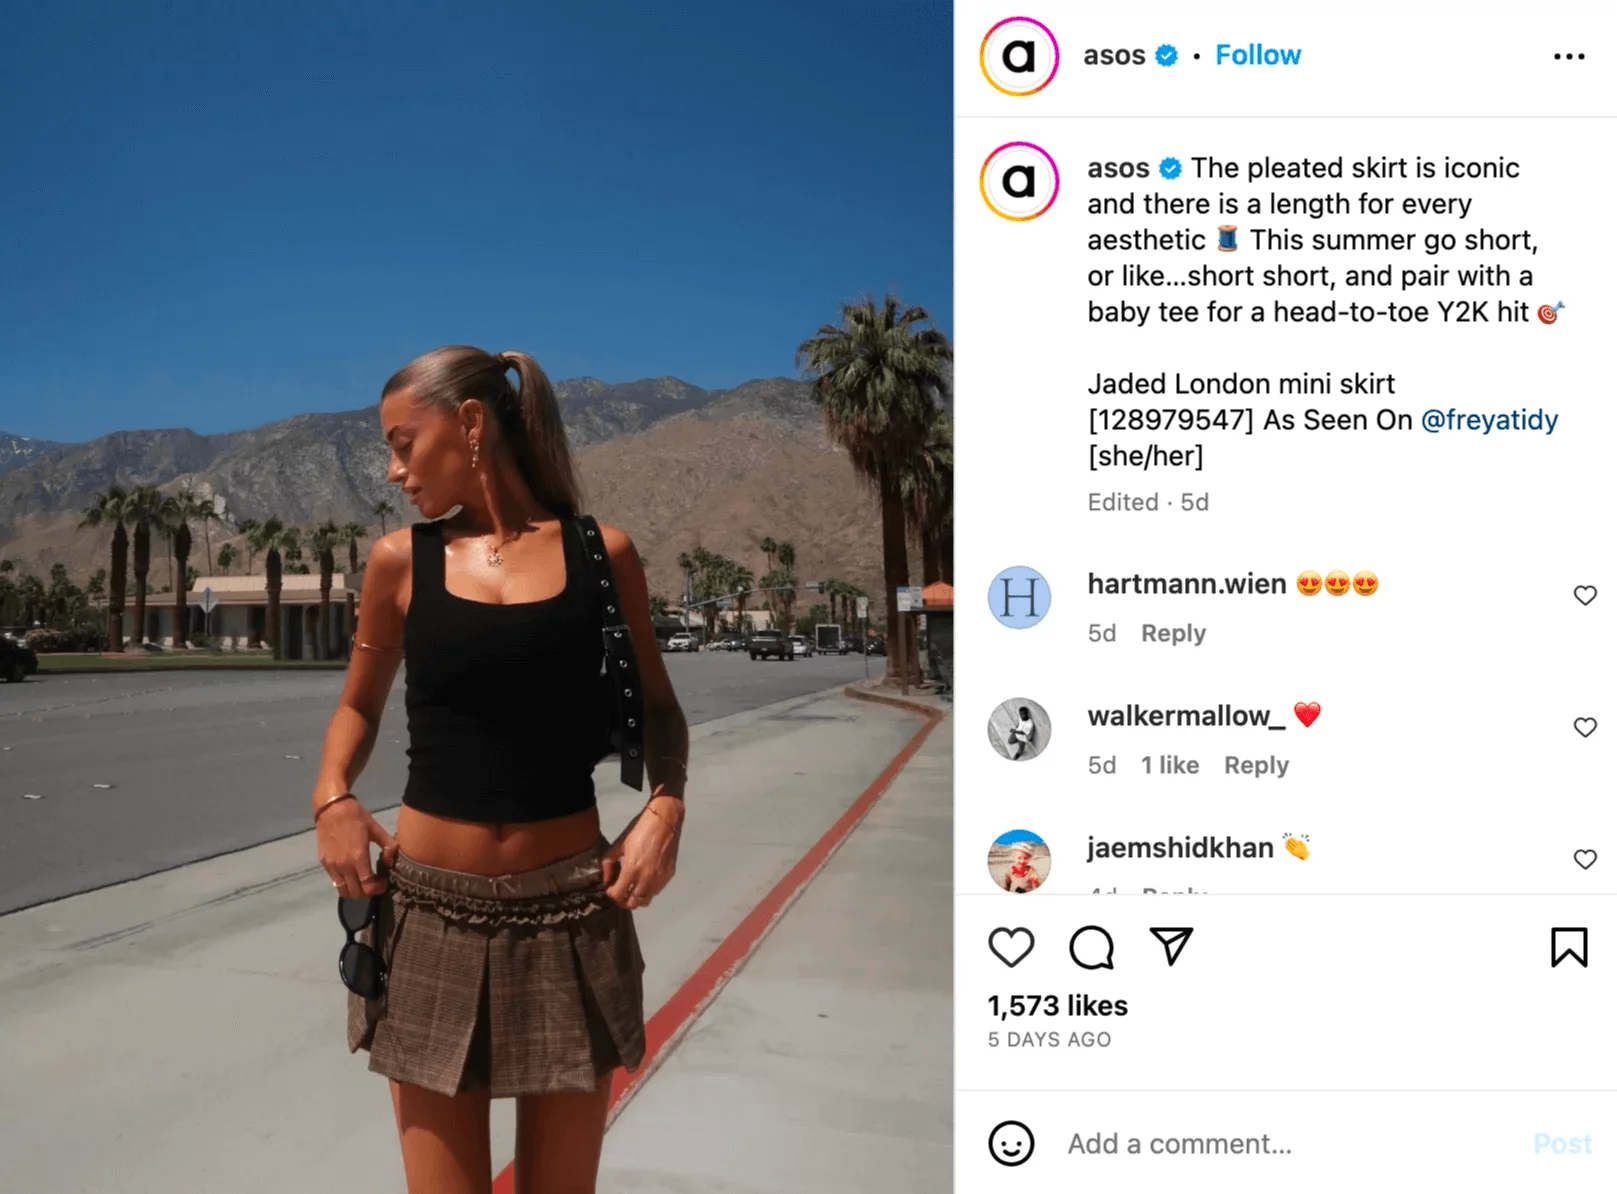 Asos Instagram post promoting a pleated short skirt